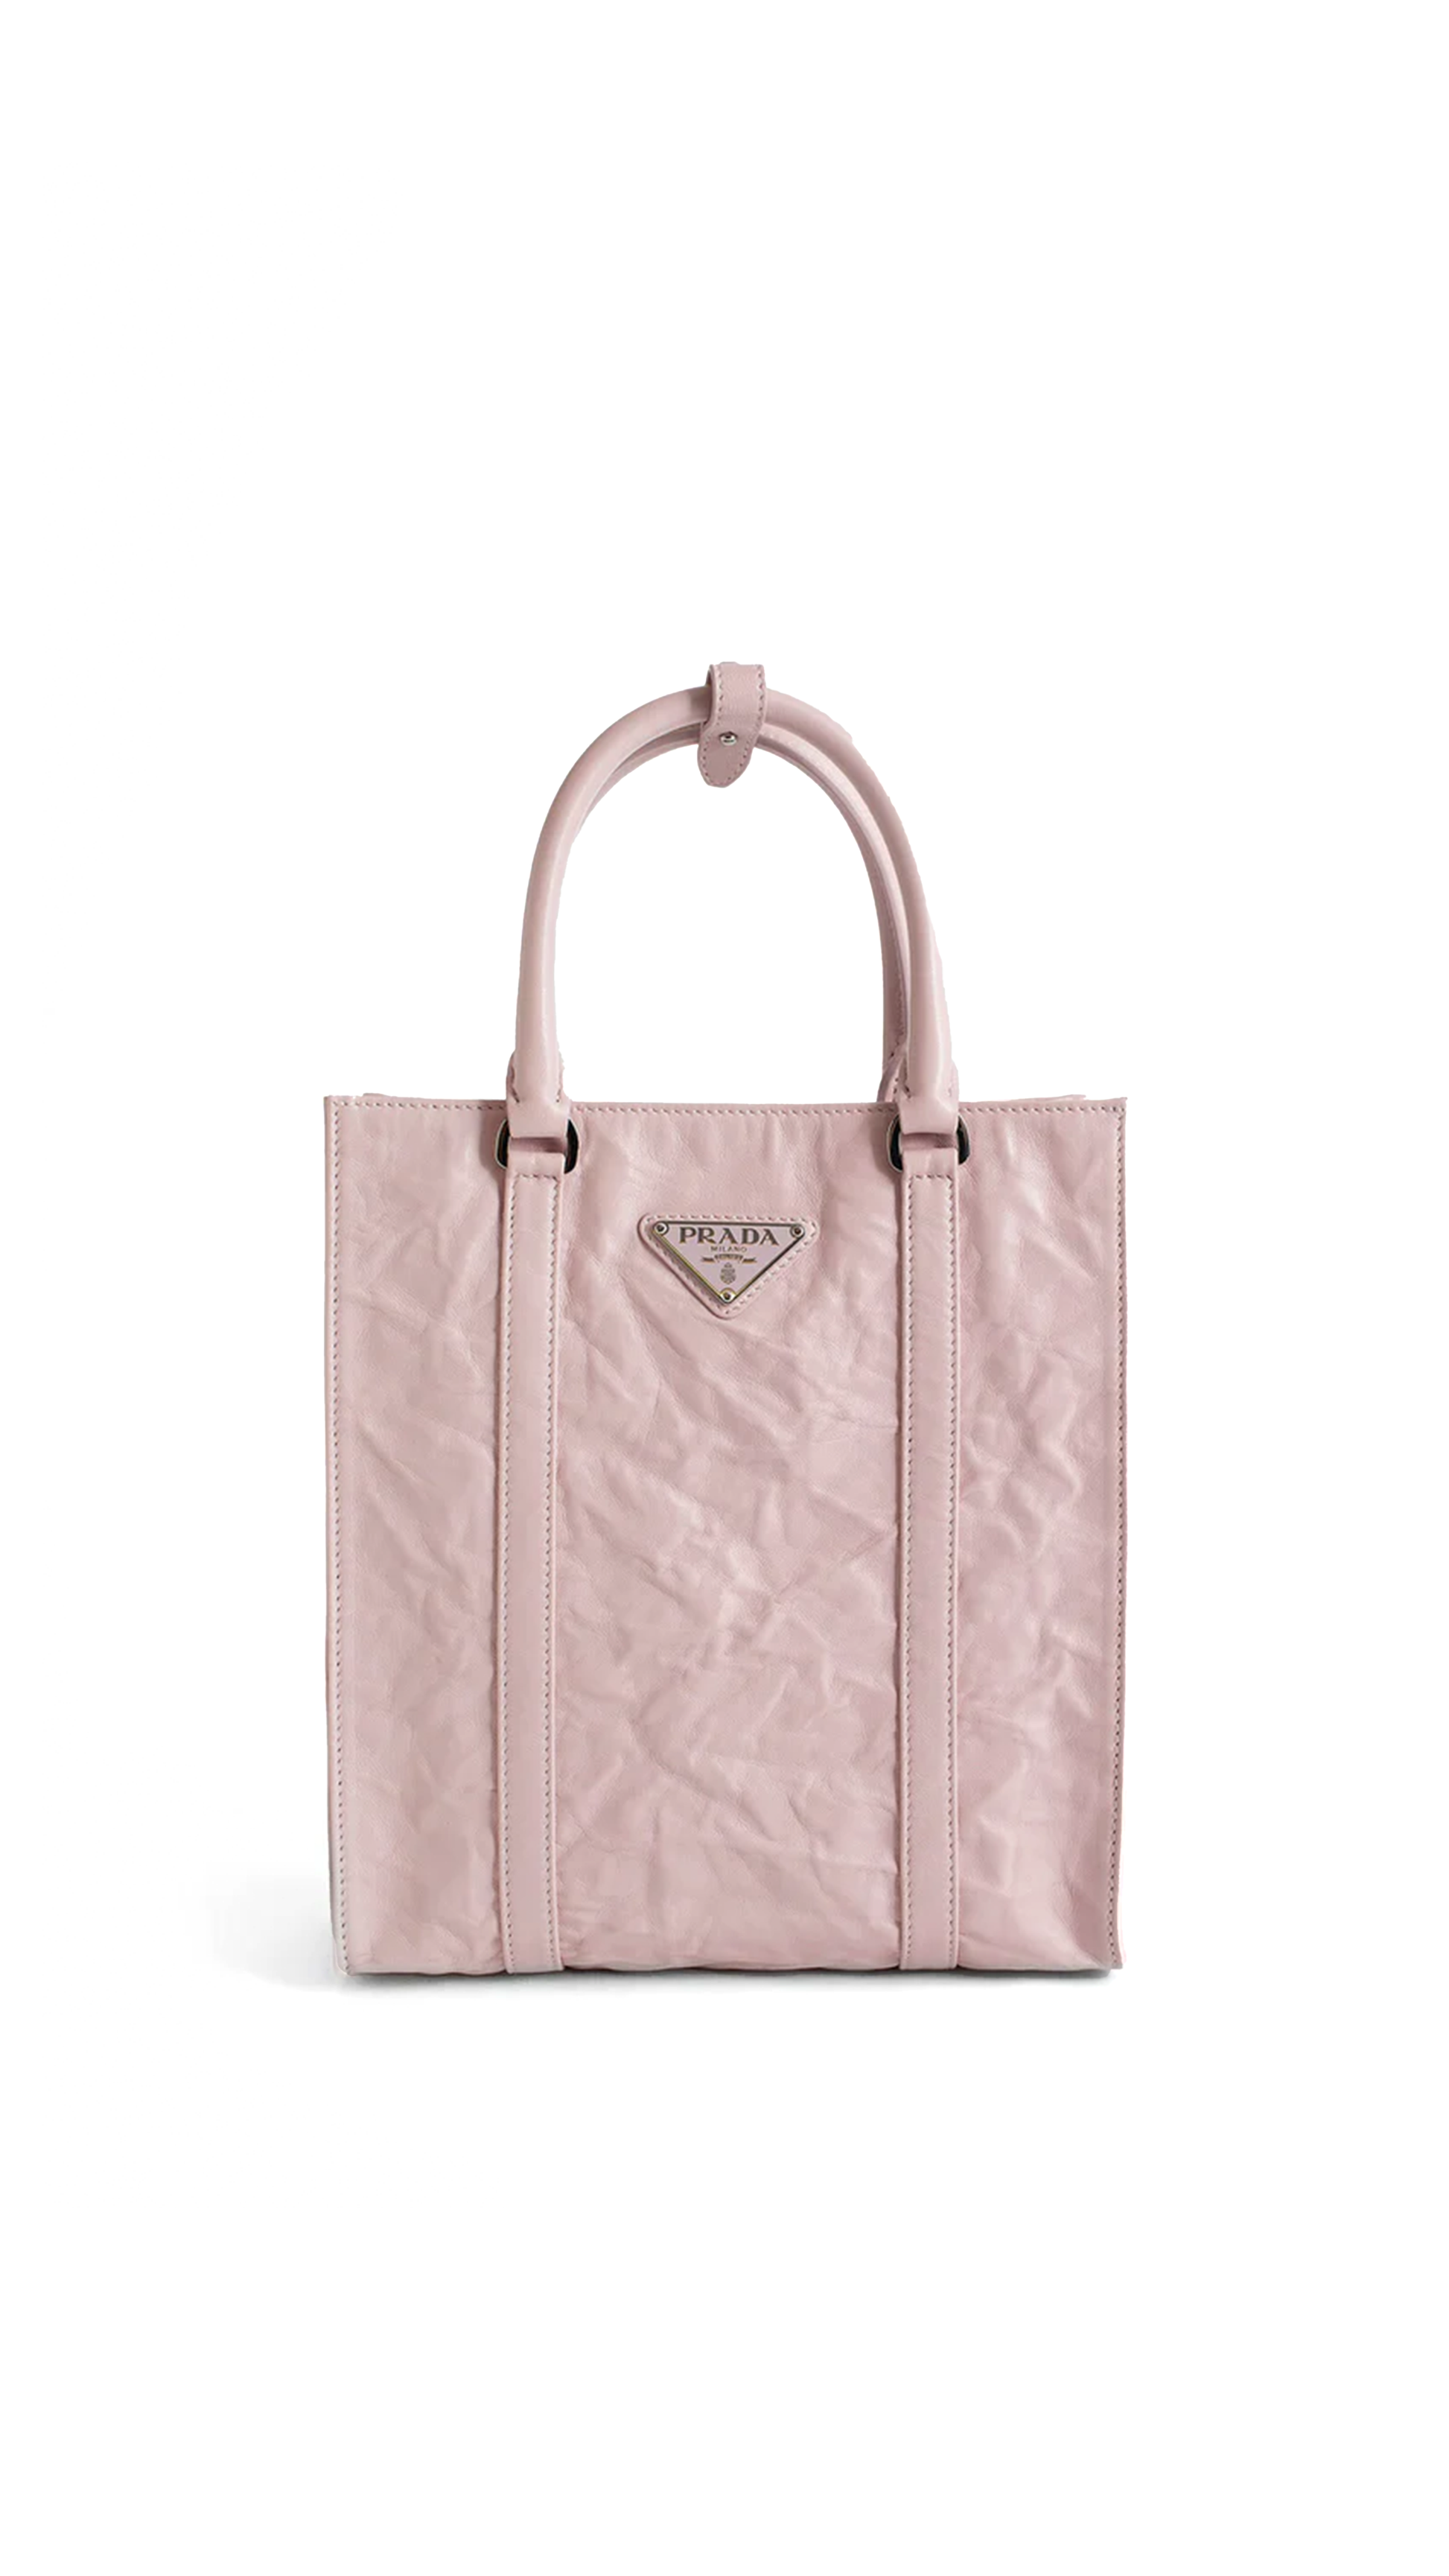 Prada Women's Small Antique Nappa Leather Top Handle Bag